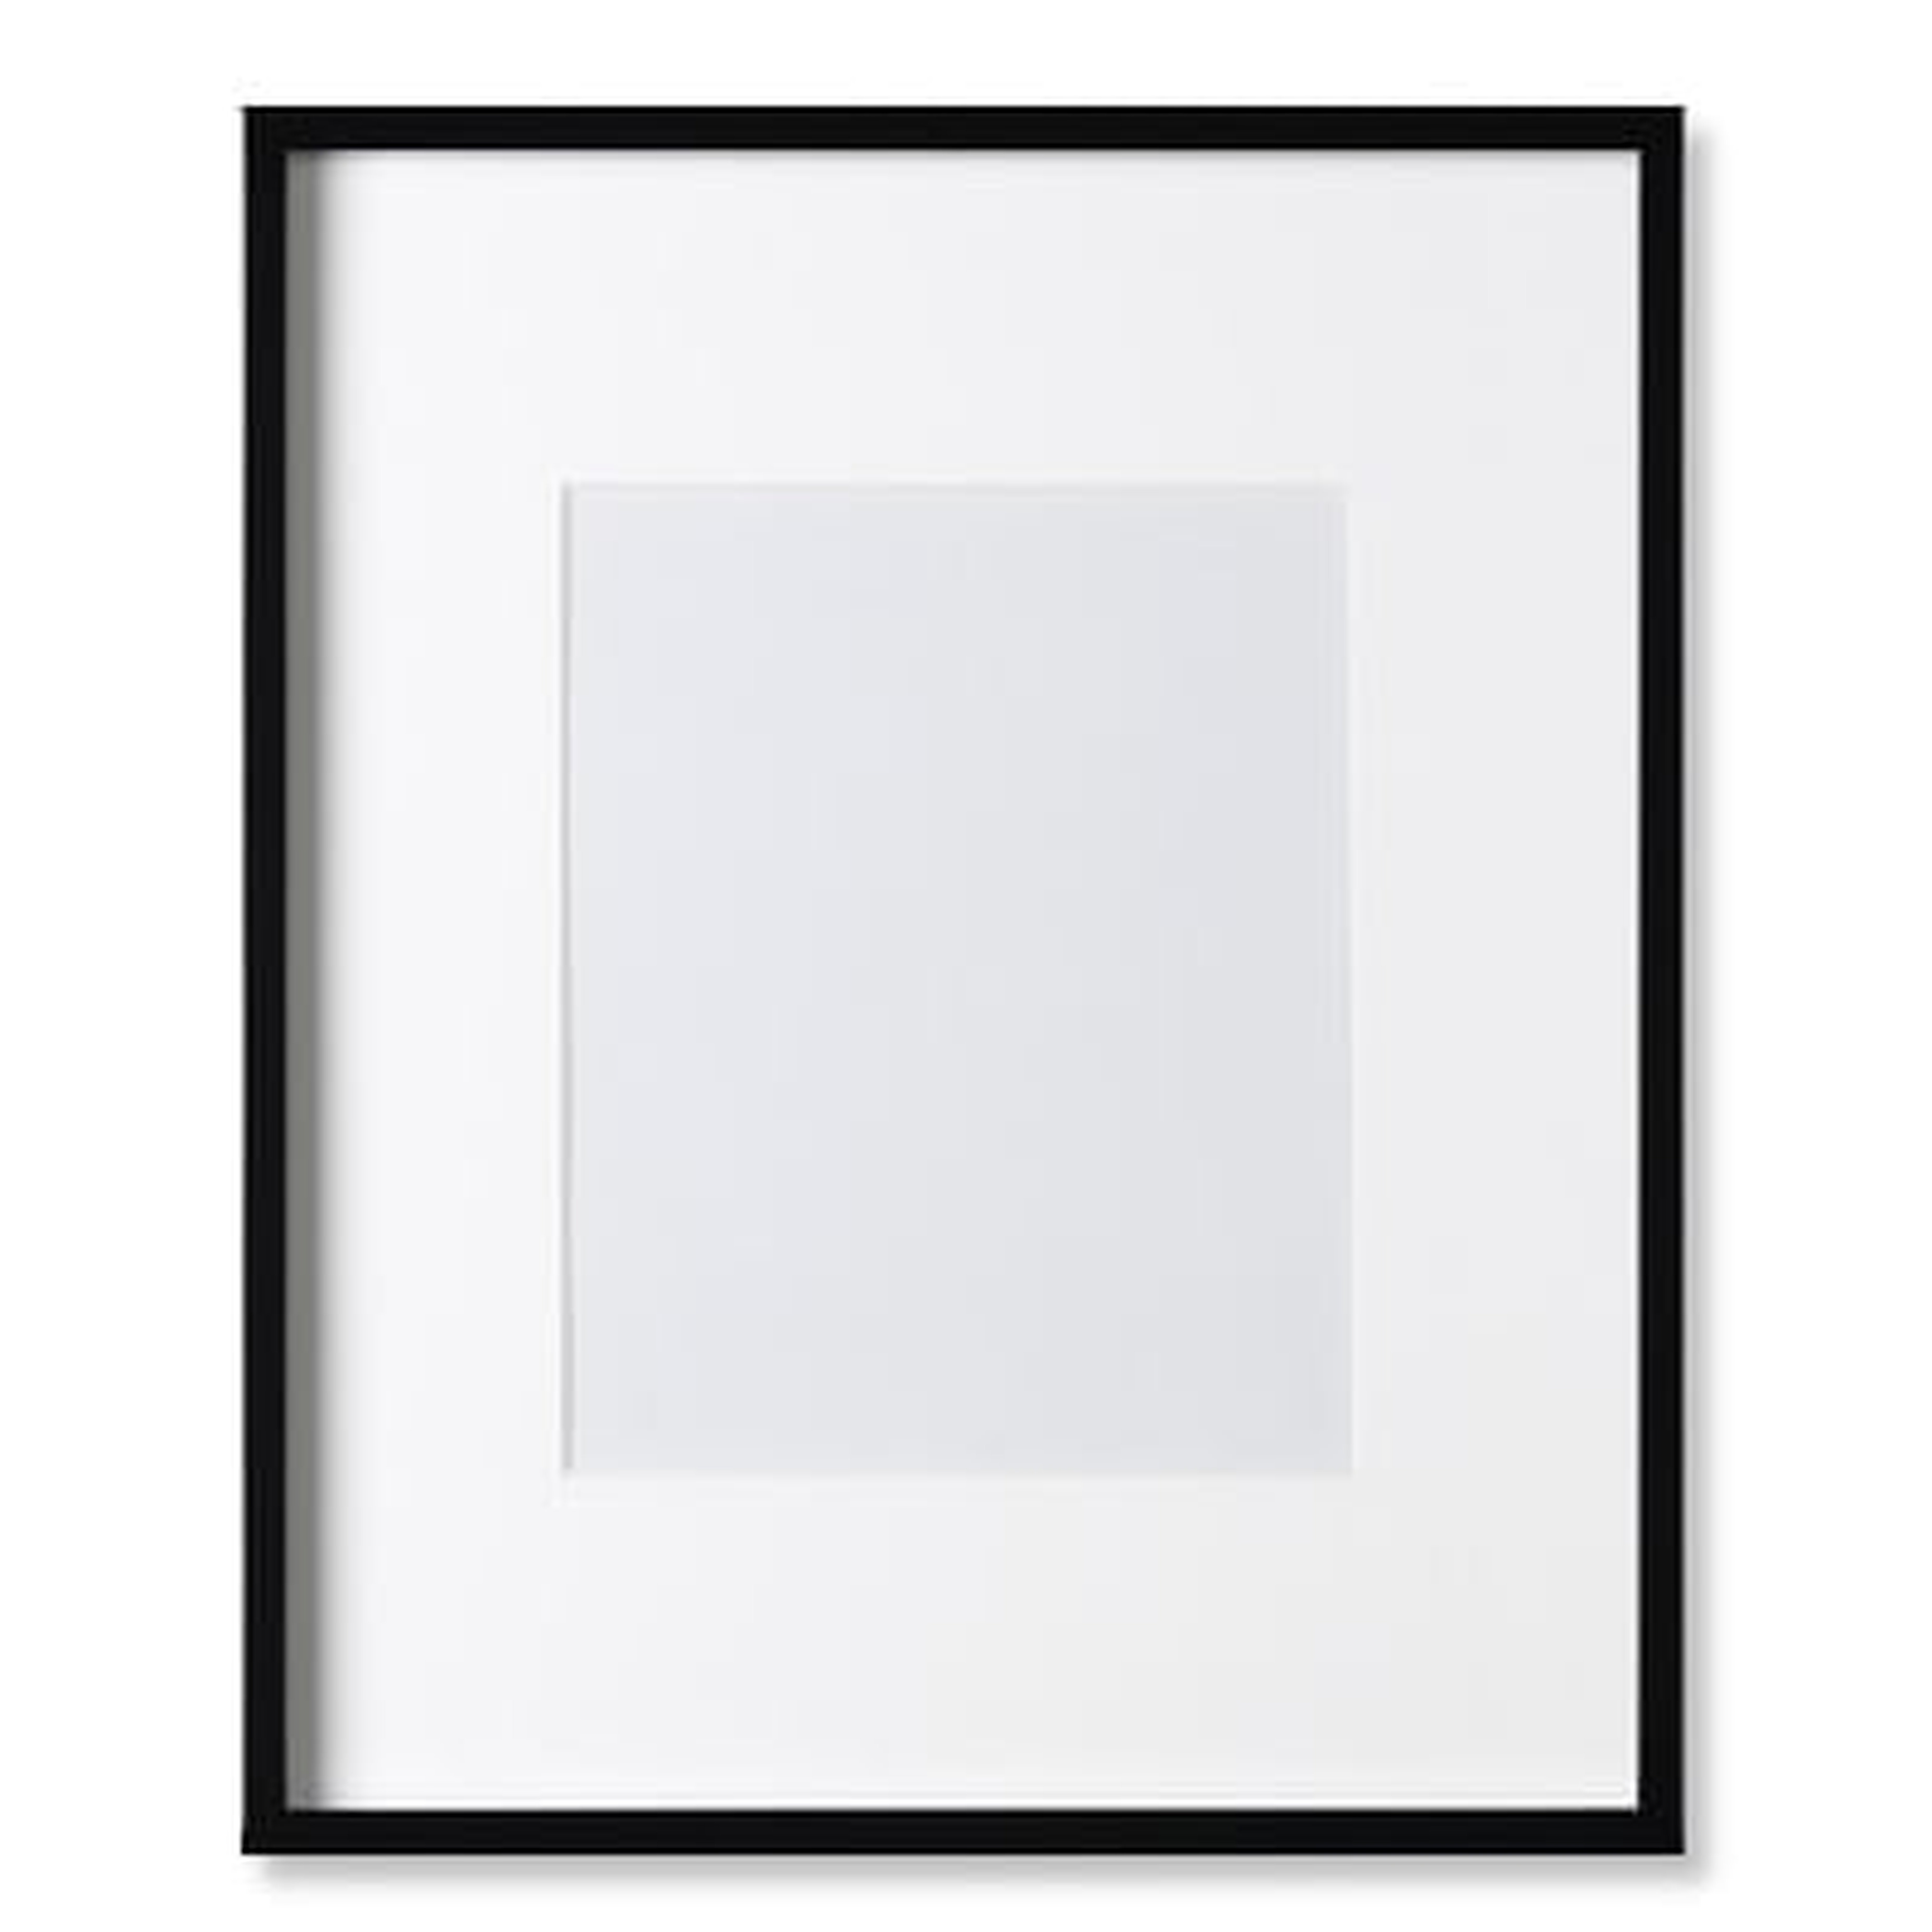 Black Lacquer Gallery Picture Frame, 8" X 10" - Williams Sonoma